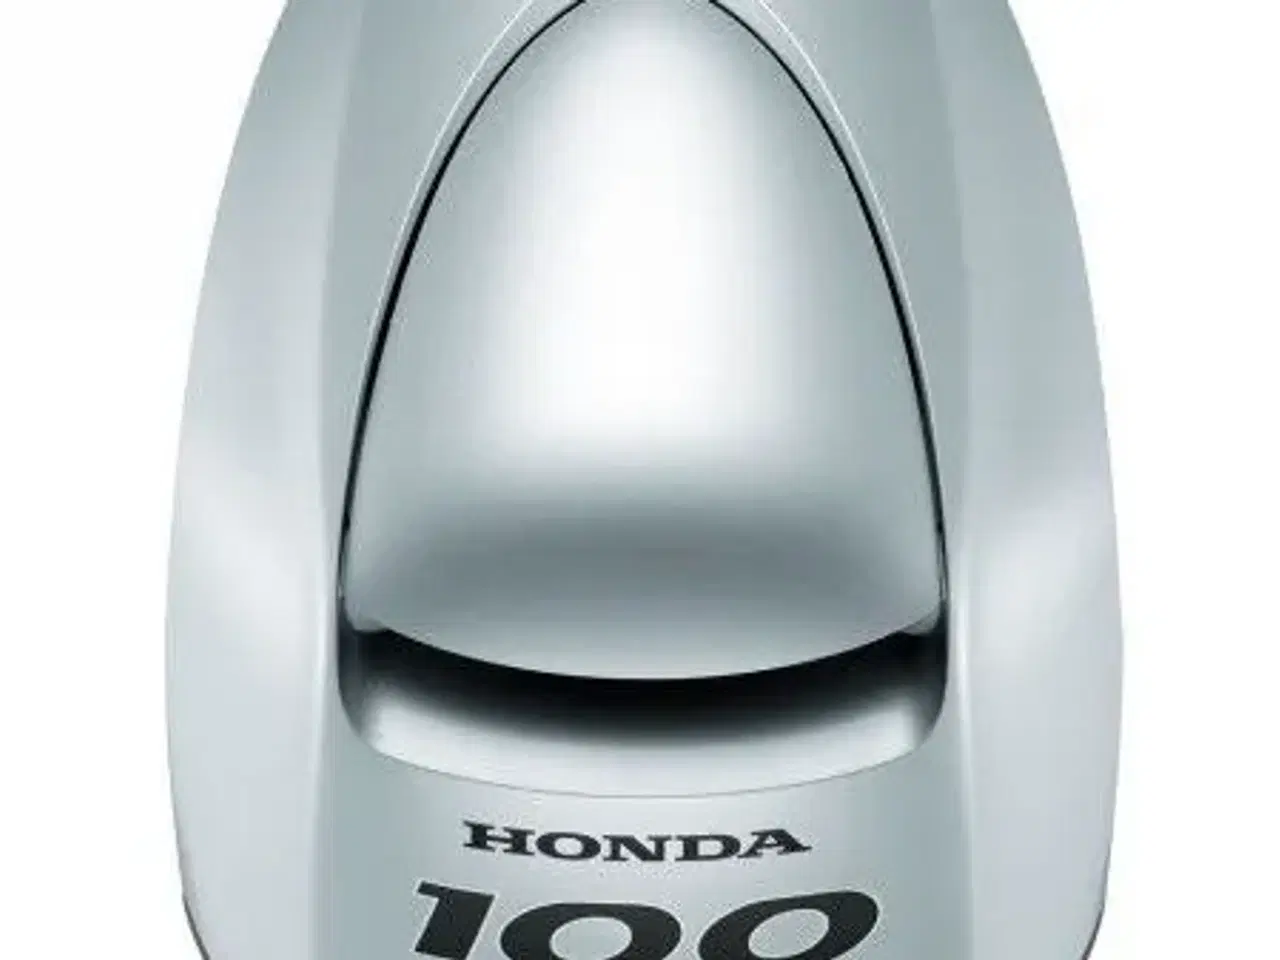 Billede 4 - Ny Honda BF100